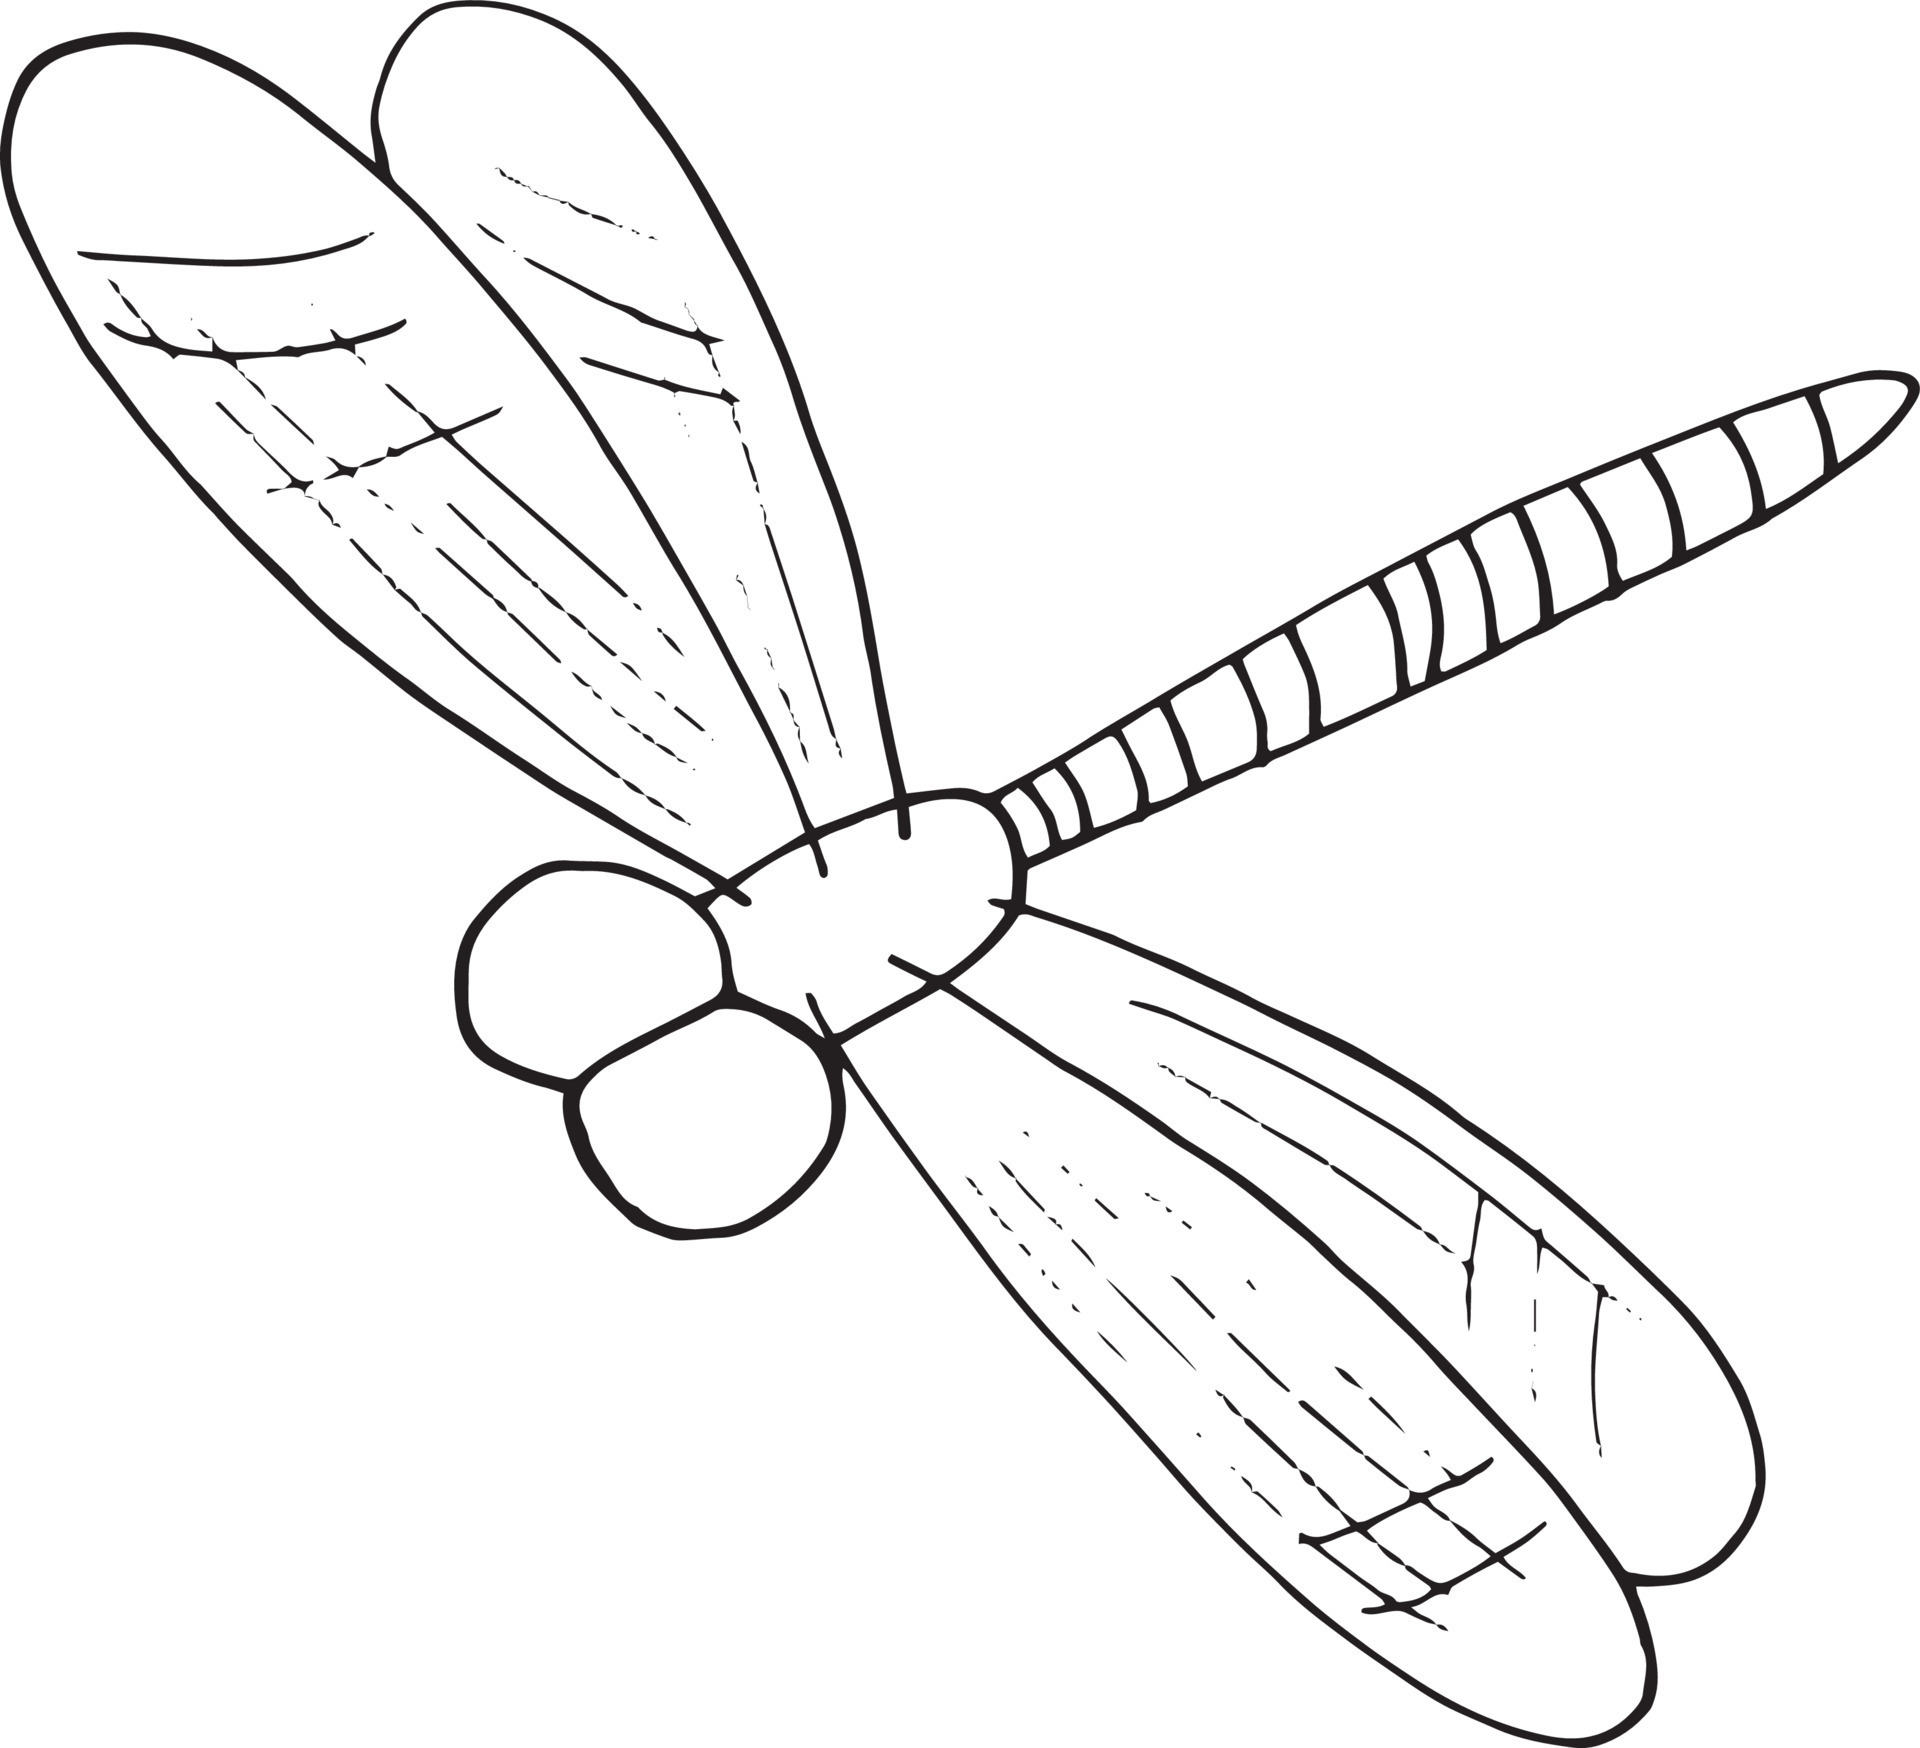 dragonfly icon. hand drawn doodle style. , minimalism, monochrome ...